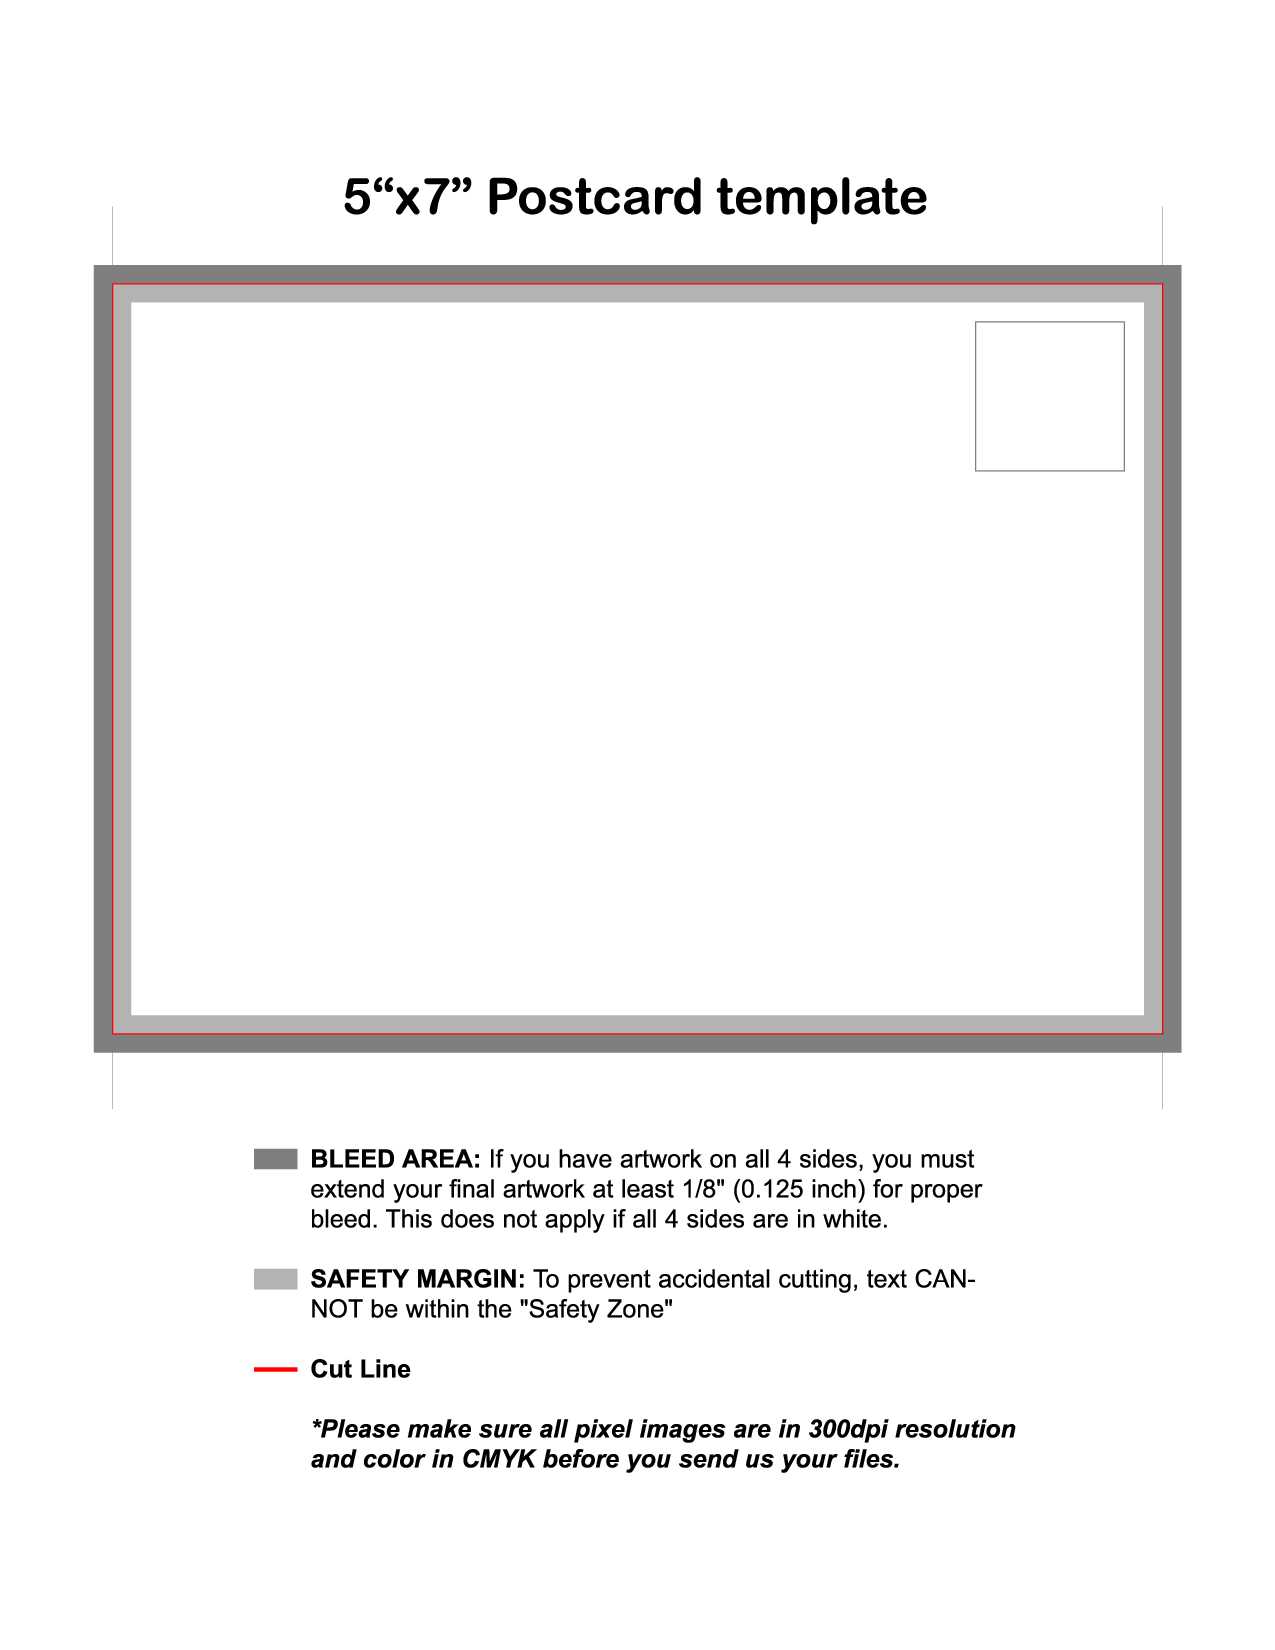 Equity Fax Template Word 2010 – Takub Regarding Fax Template Word 2010